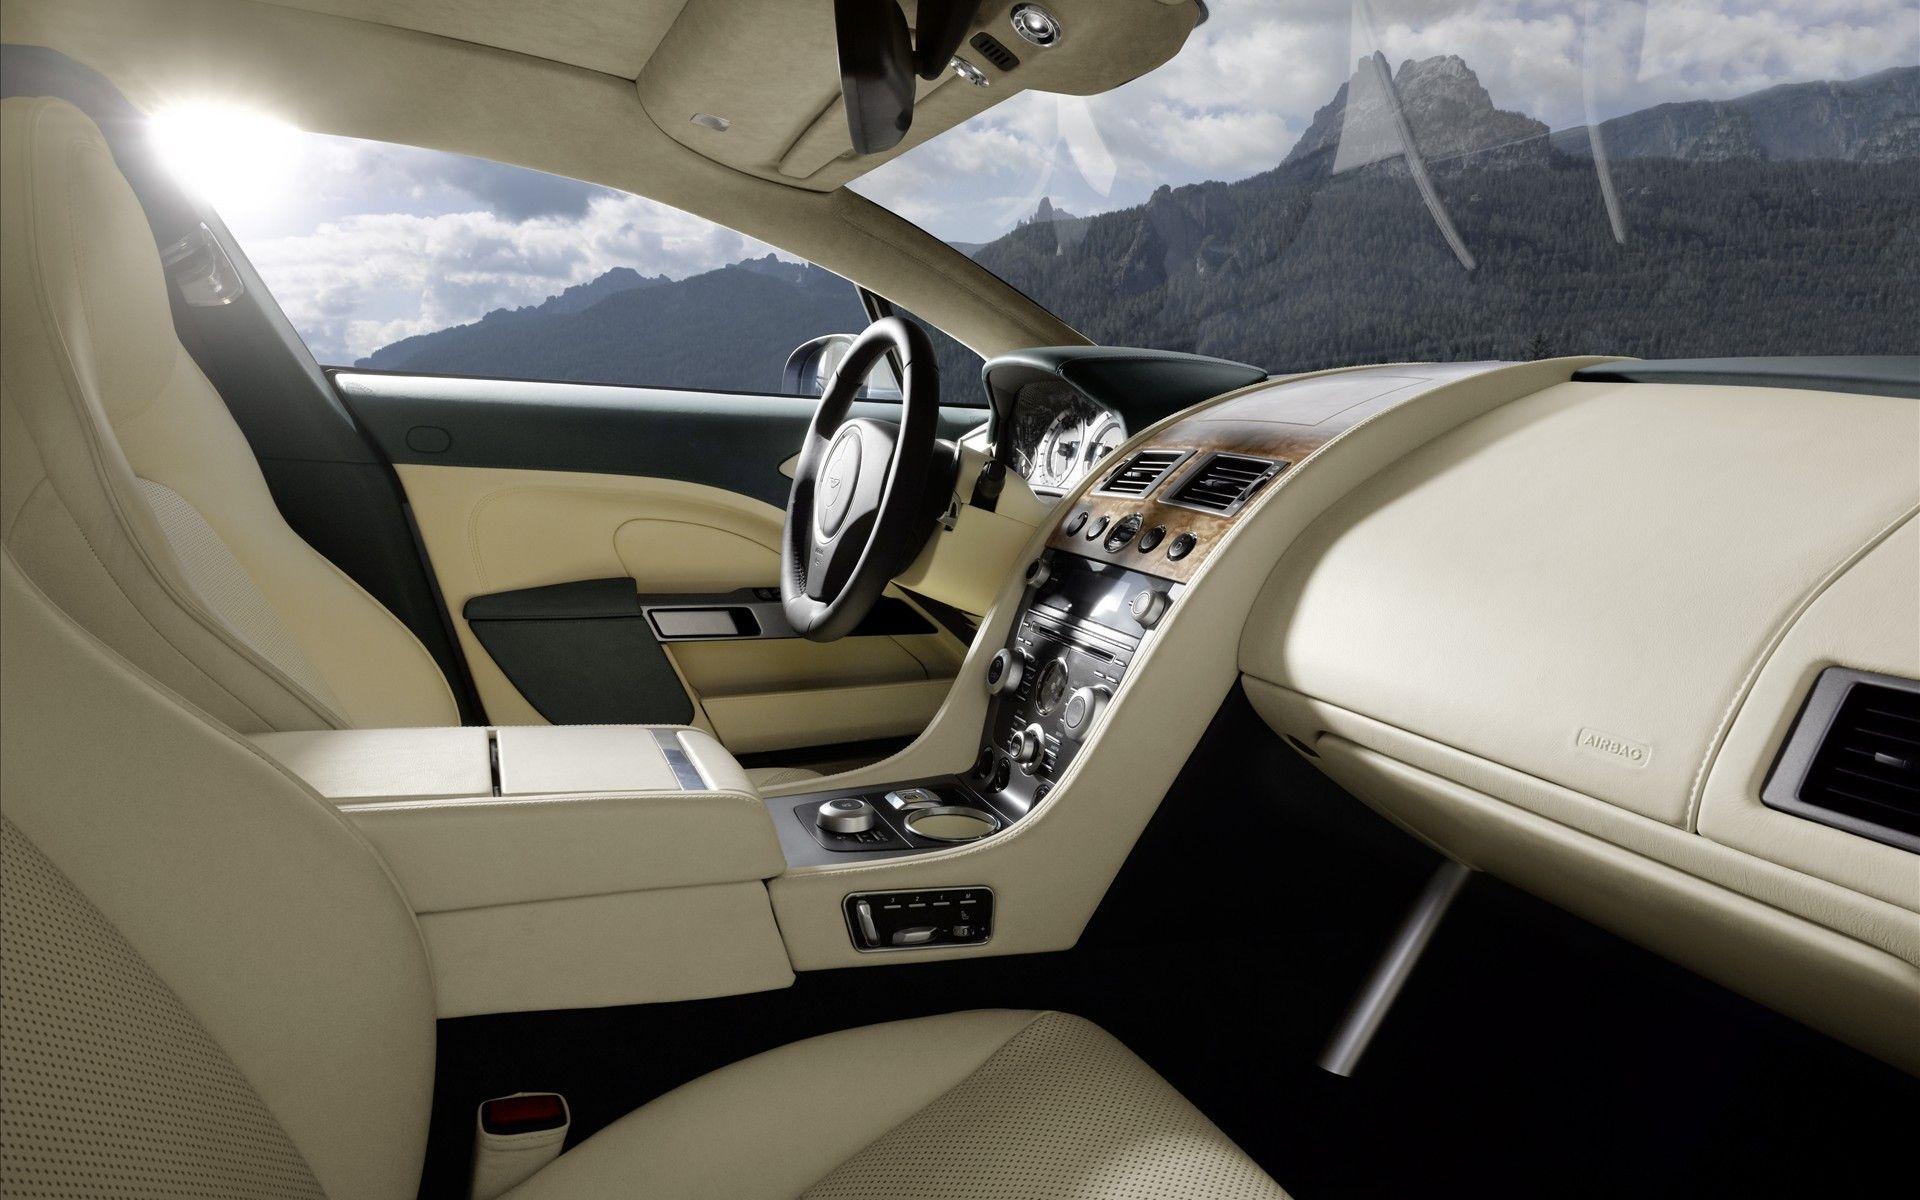 New Aston Martin Car Interior Luxury Dashboard High Quality Photo